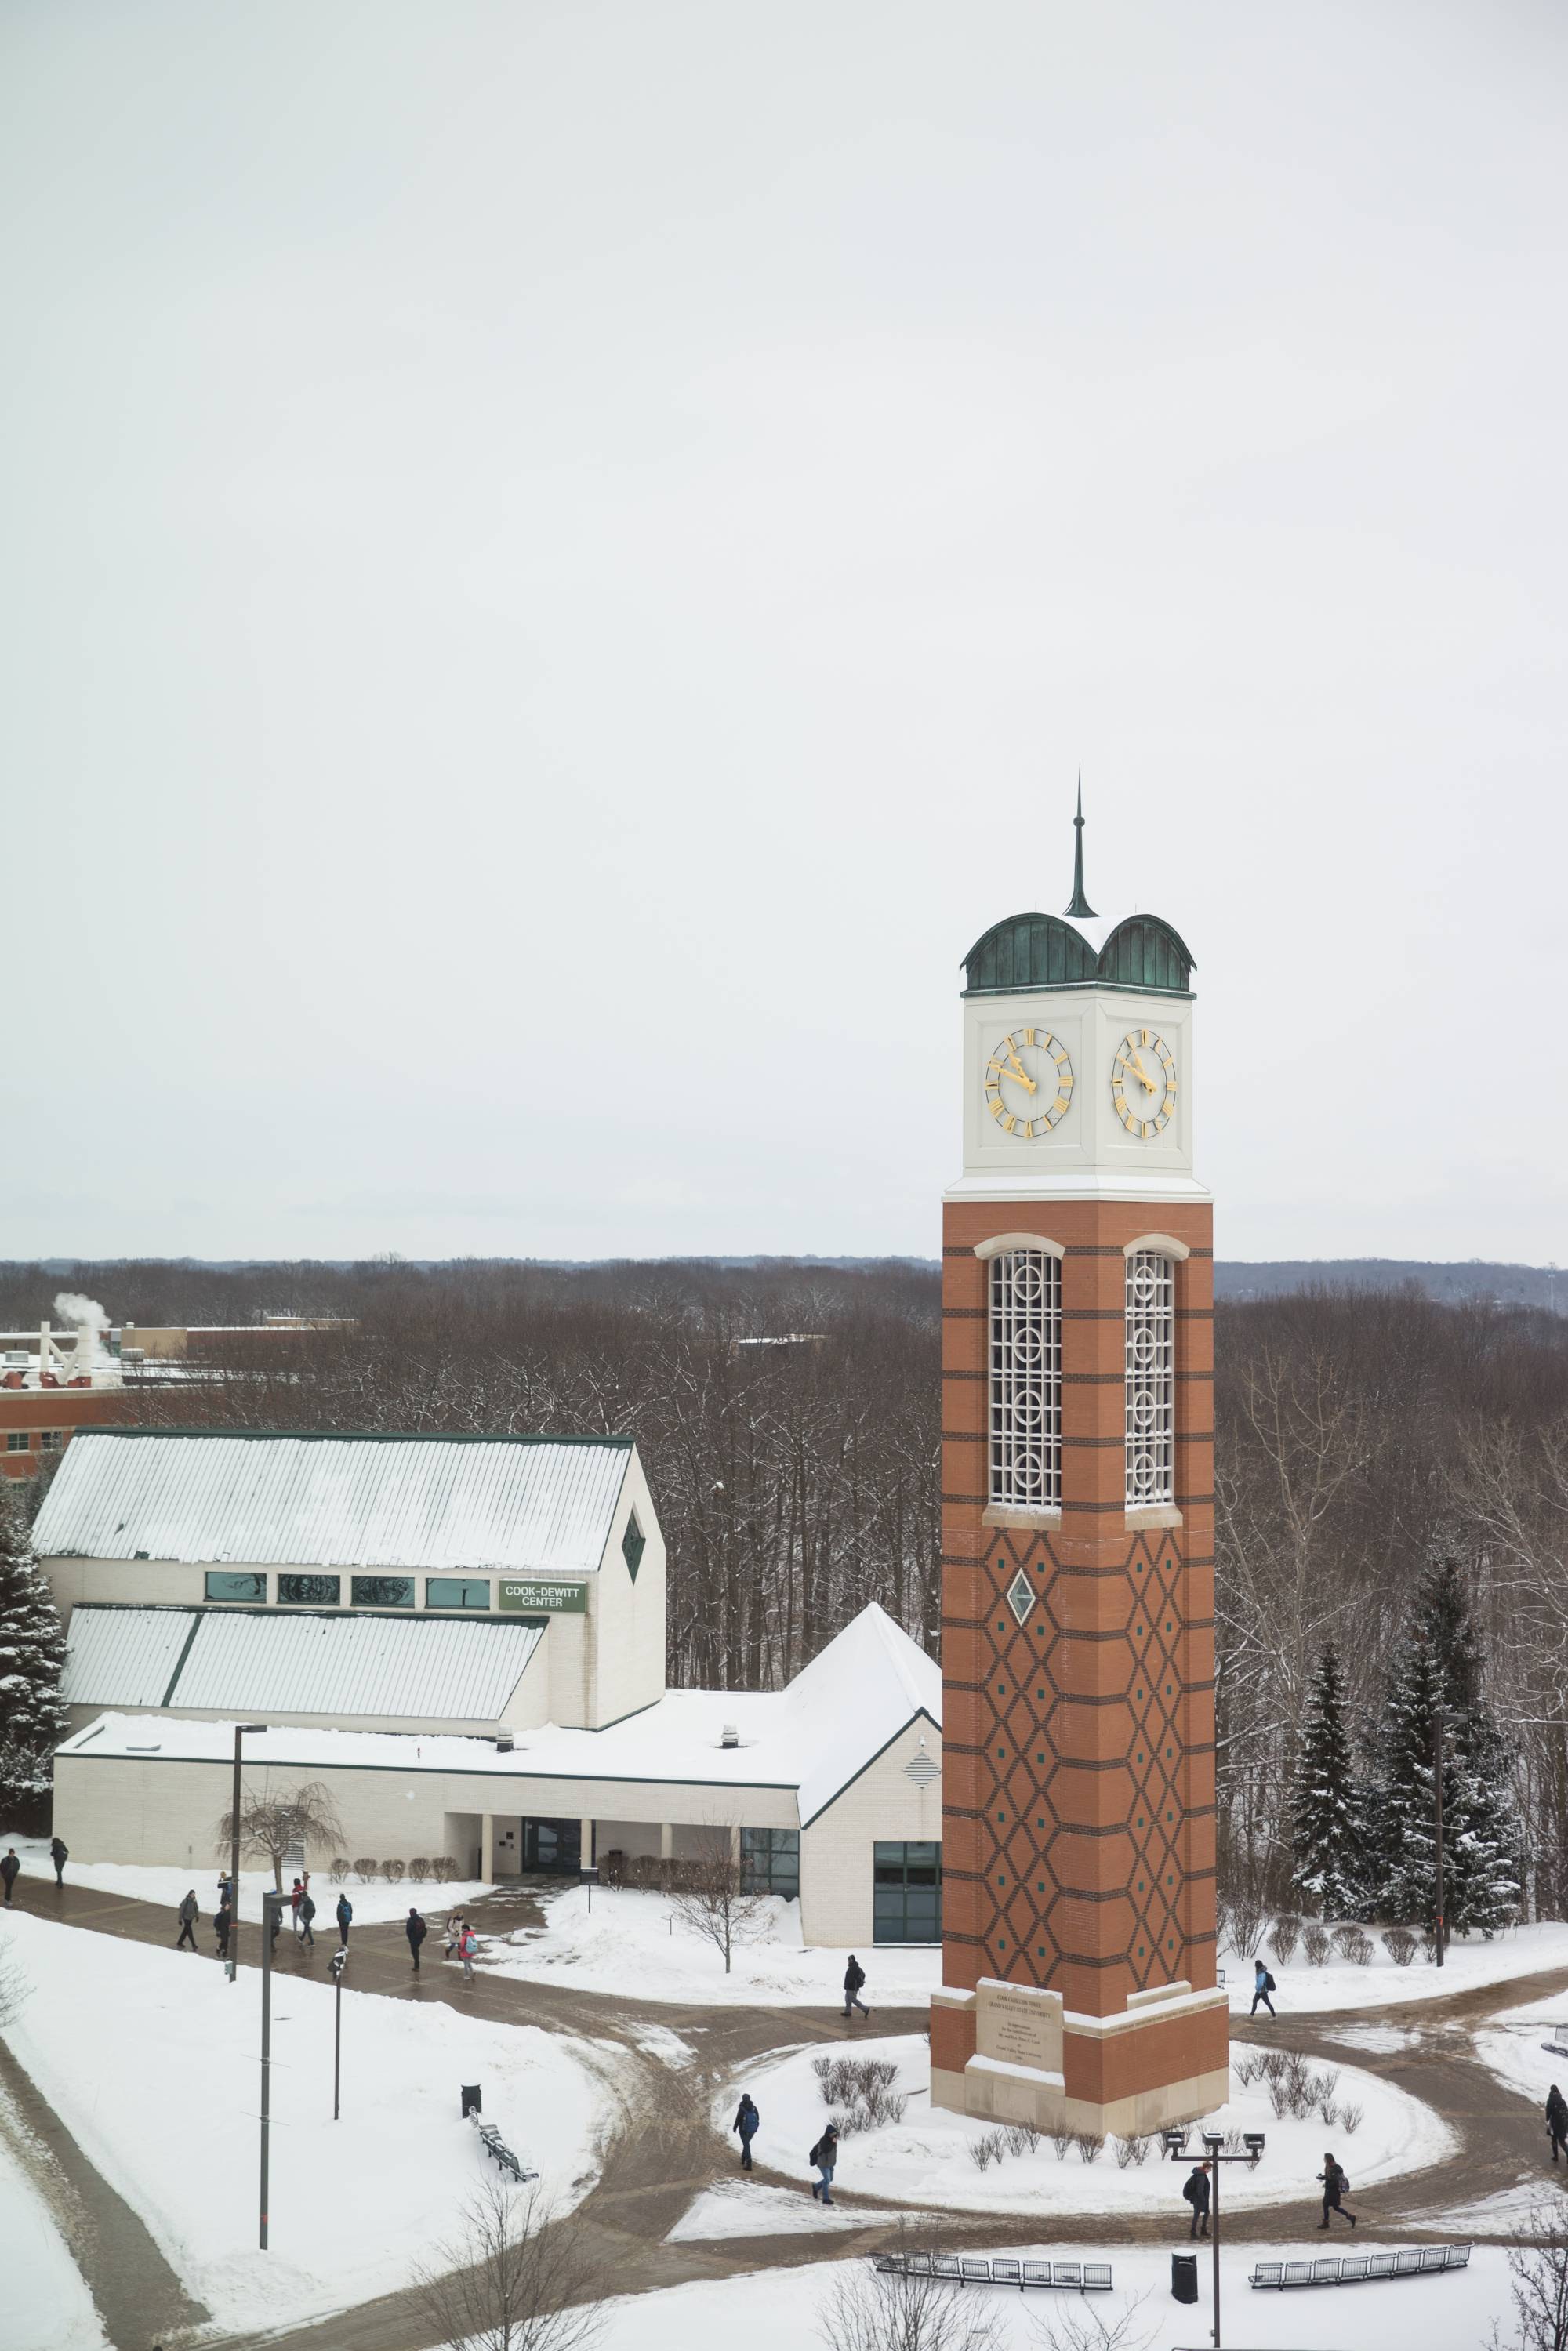 GVSU clock tower in winter